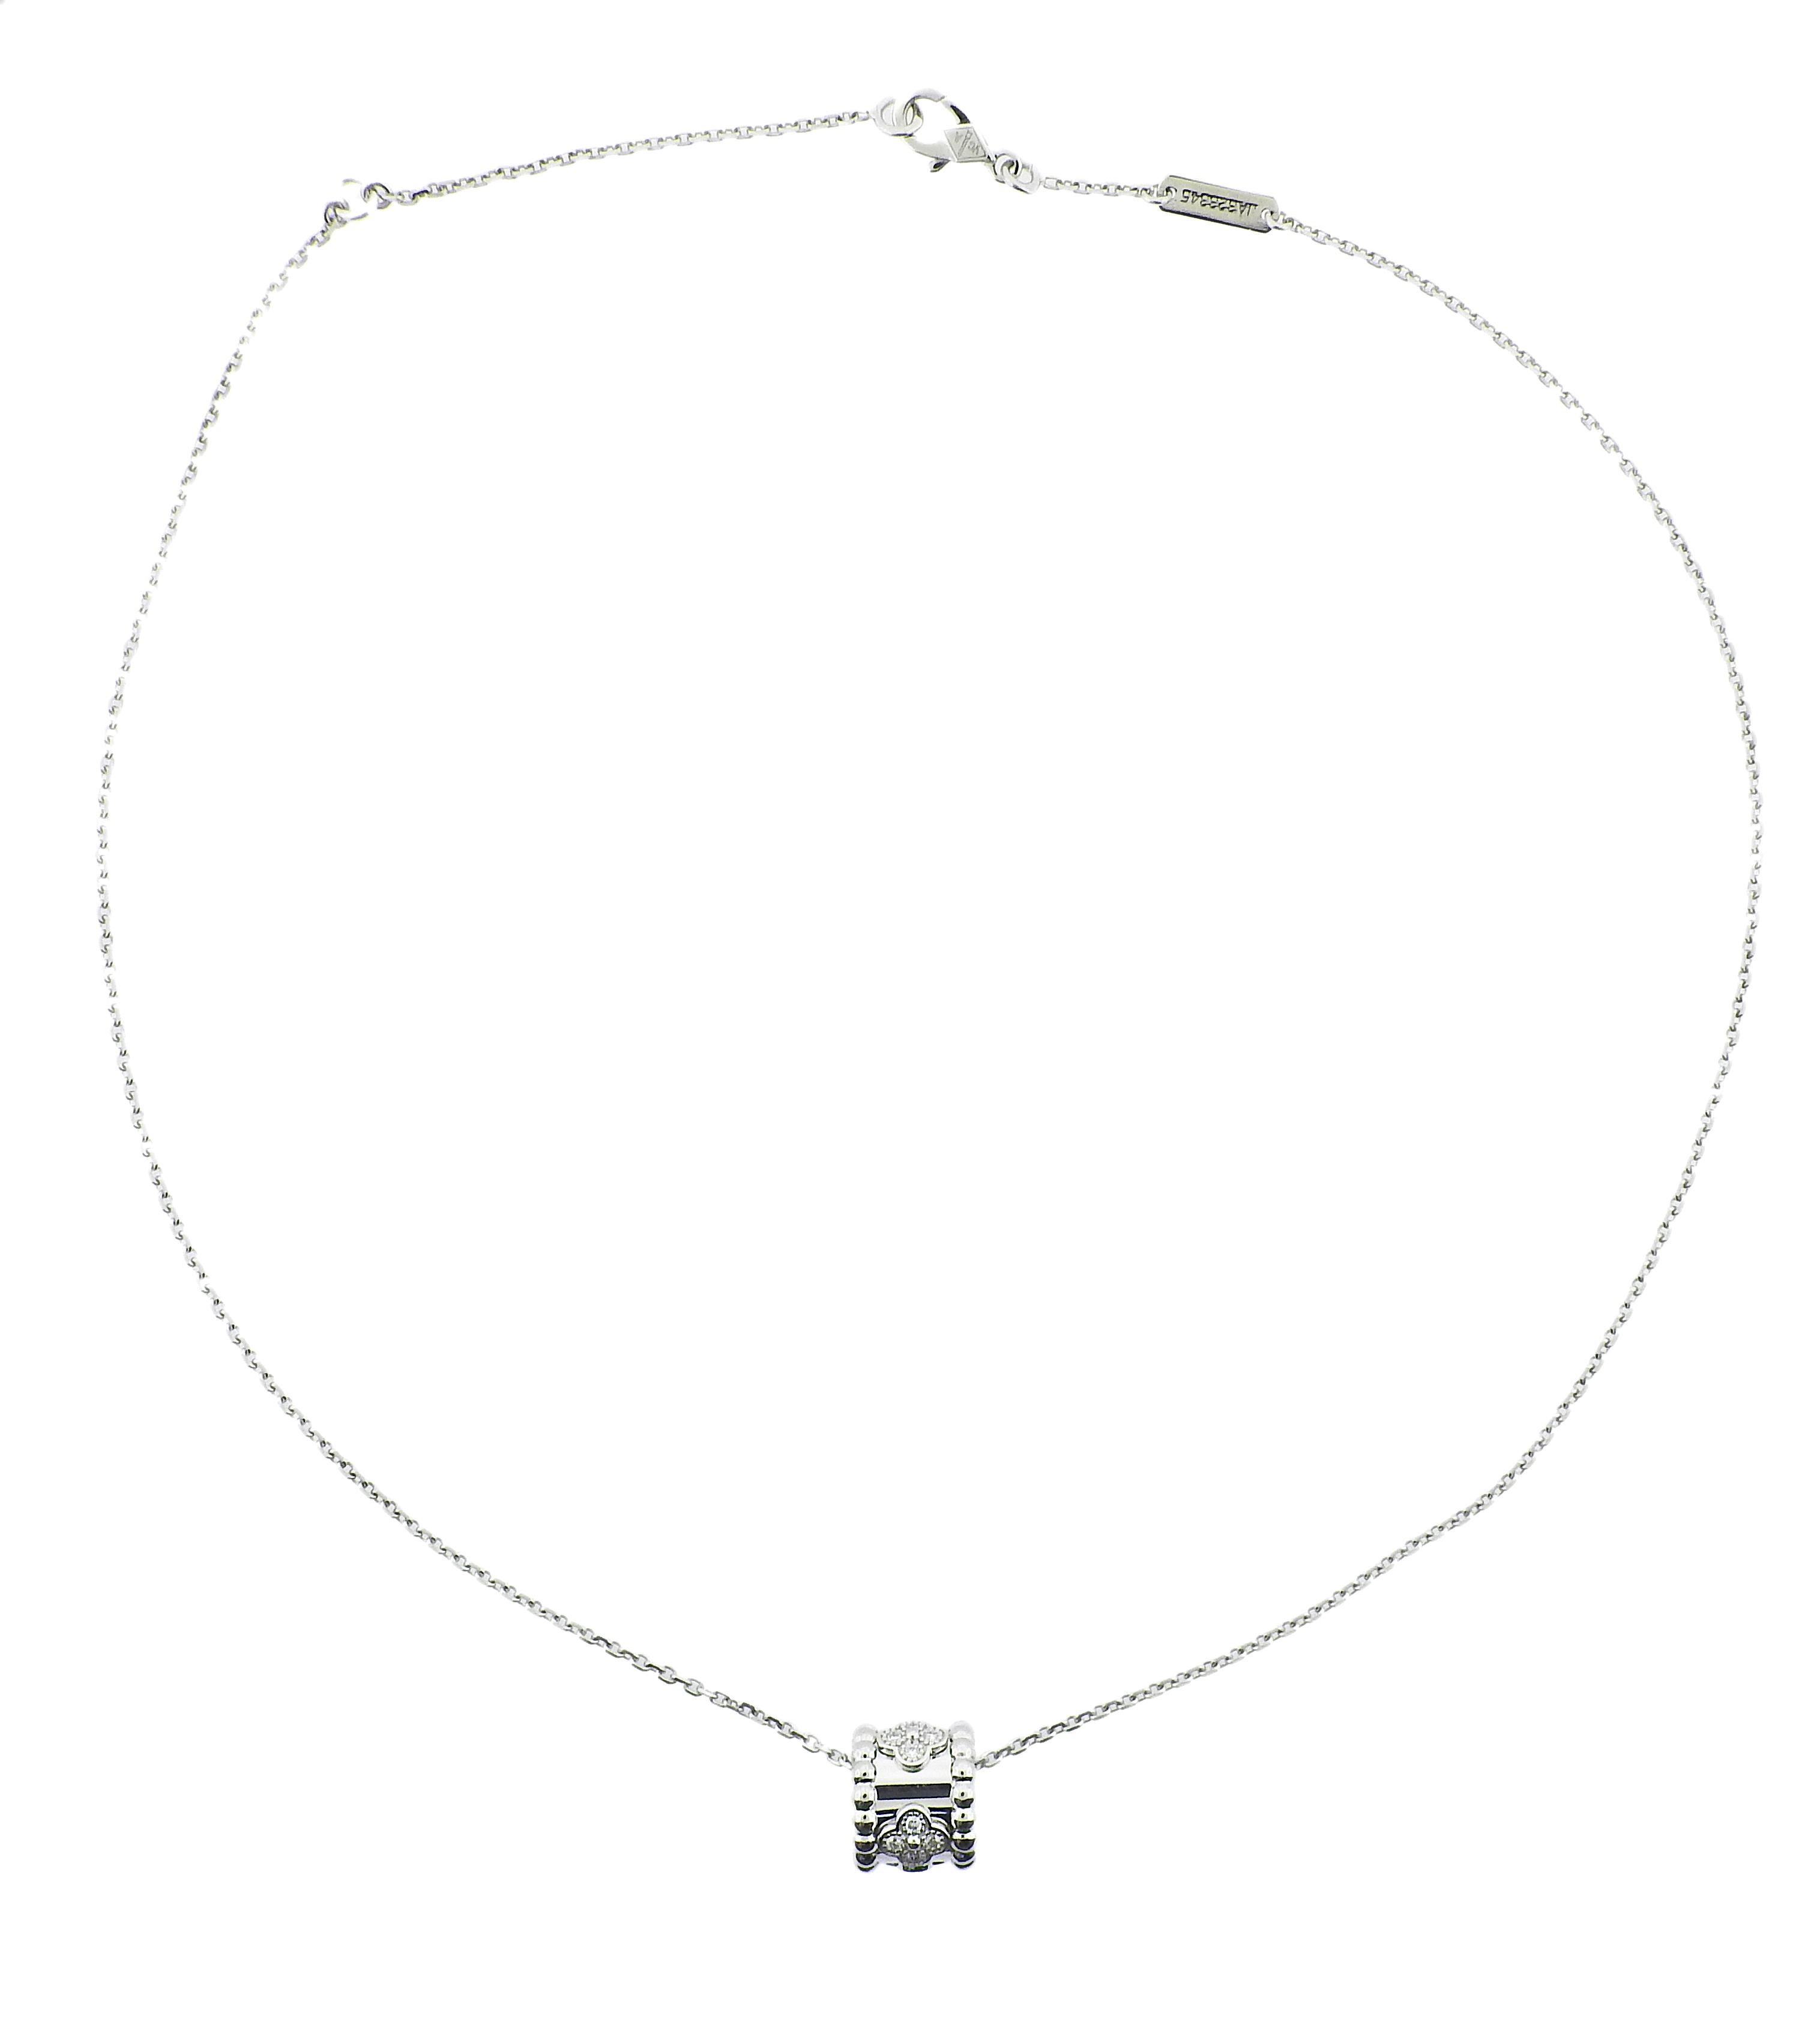 Van Cleef & Arpels Perlee pendant necklace with 0.19ctw VVS/FG diamonds. Retail $5000. Necklace is 18.5